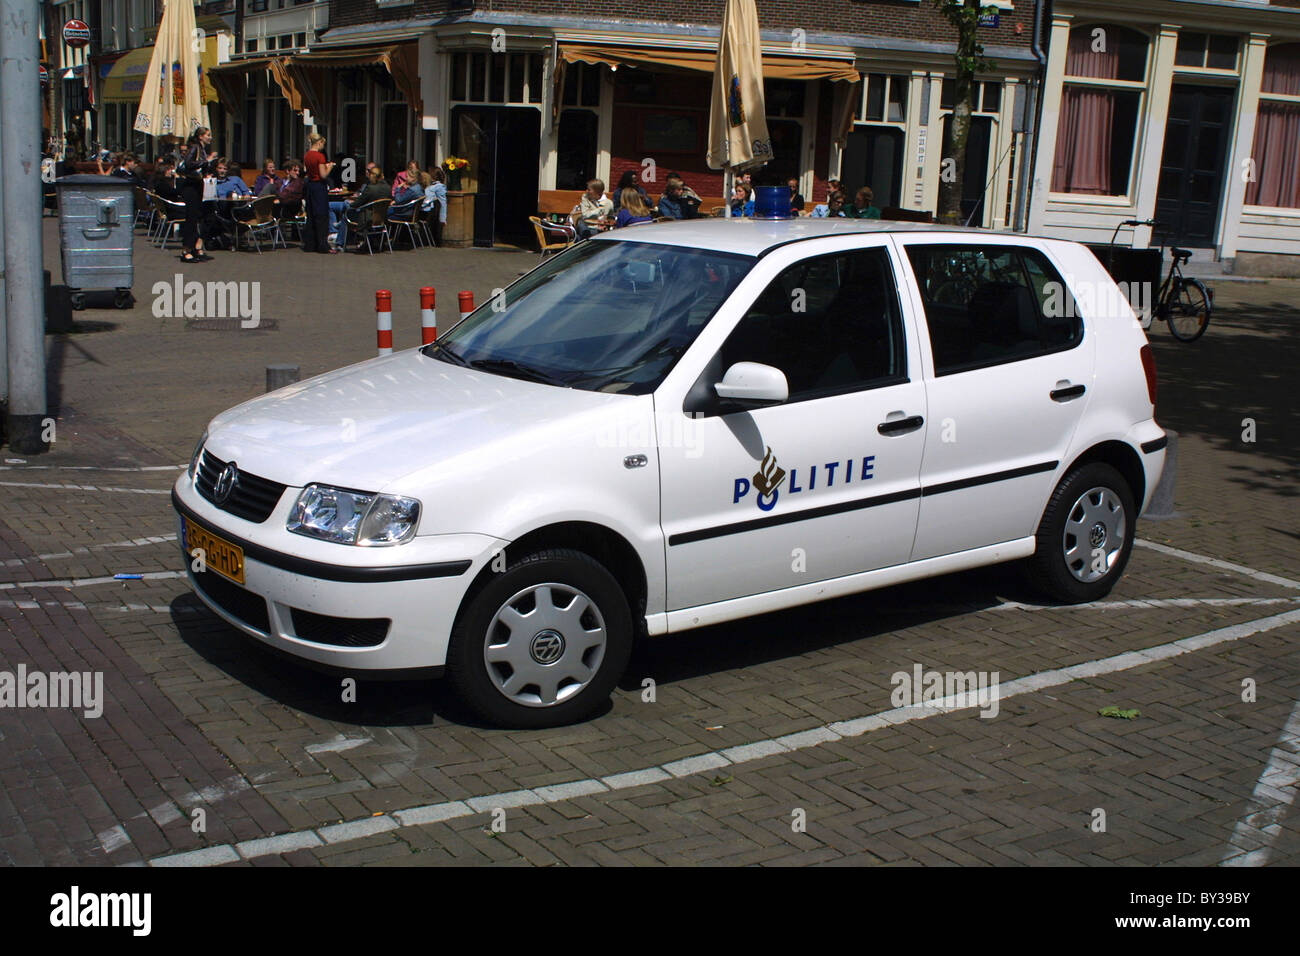 VW Polo police car Stock Photo - Alamy